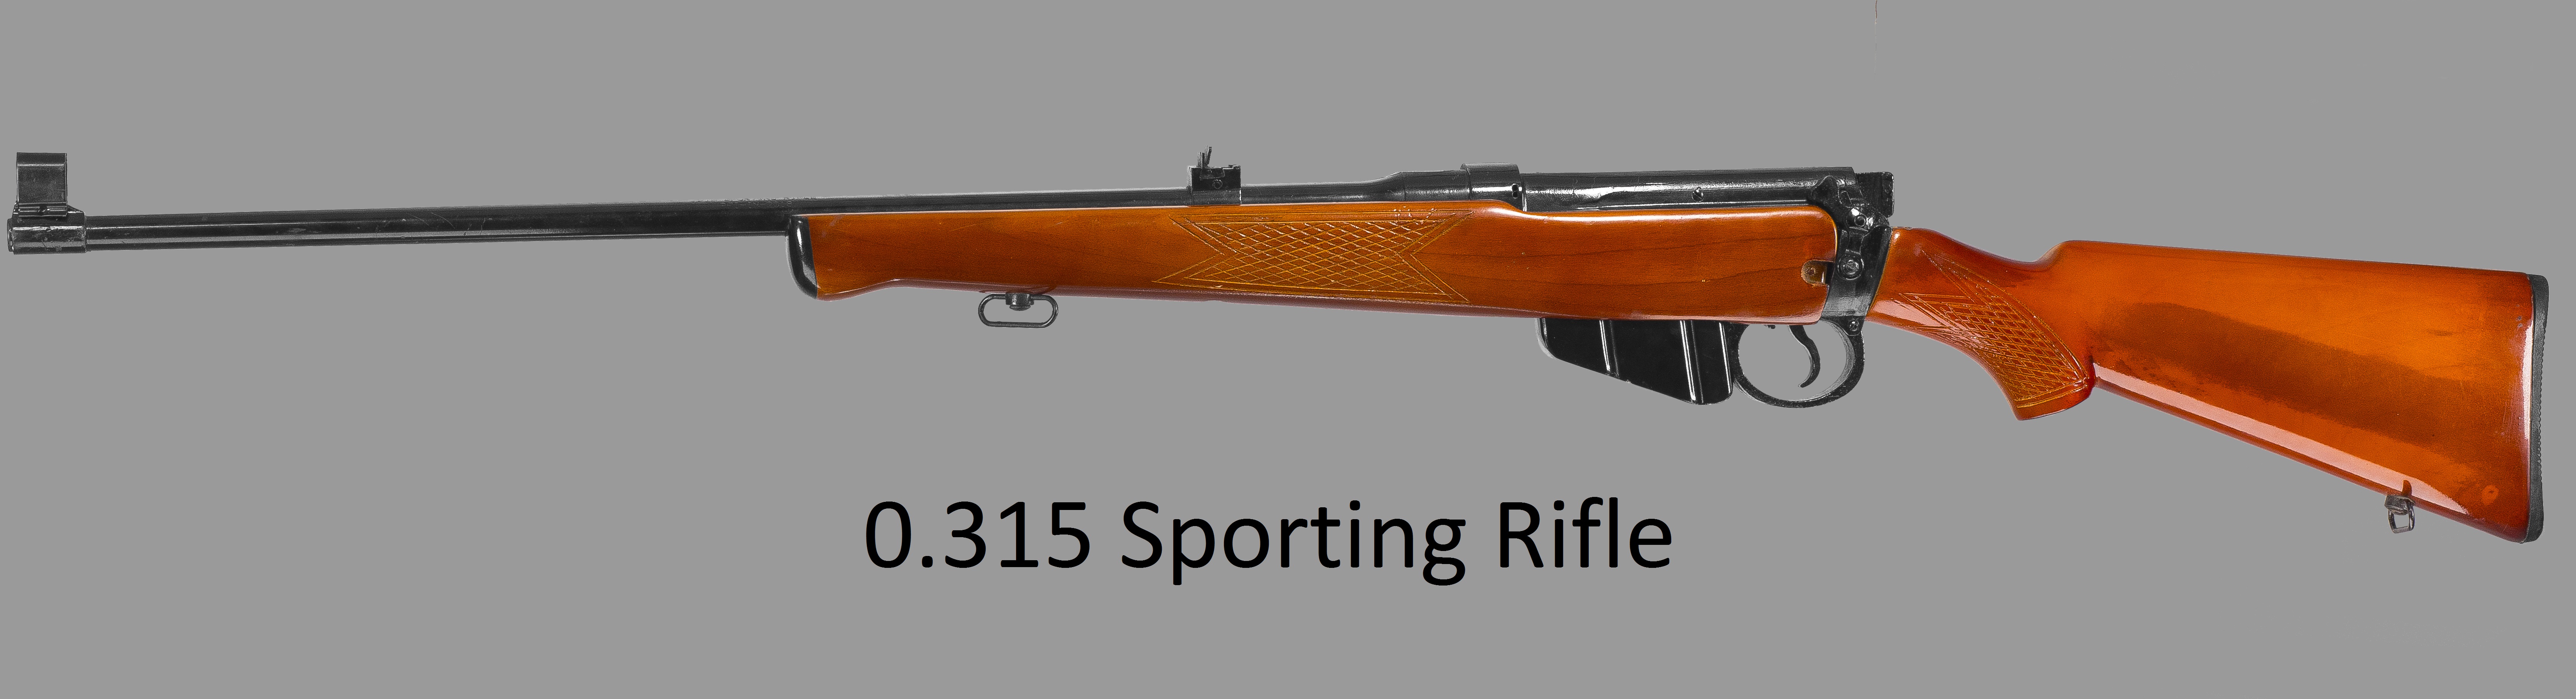 0.315 Sporting Rifle